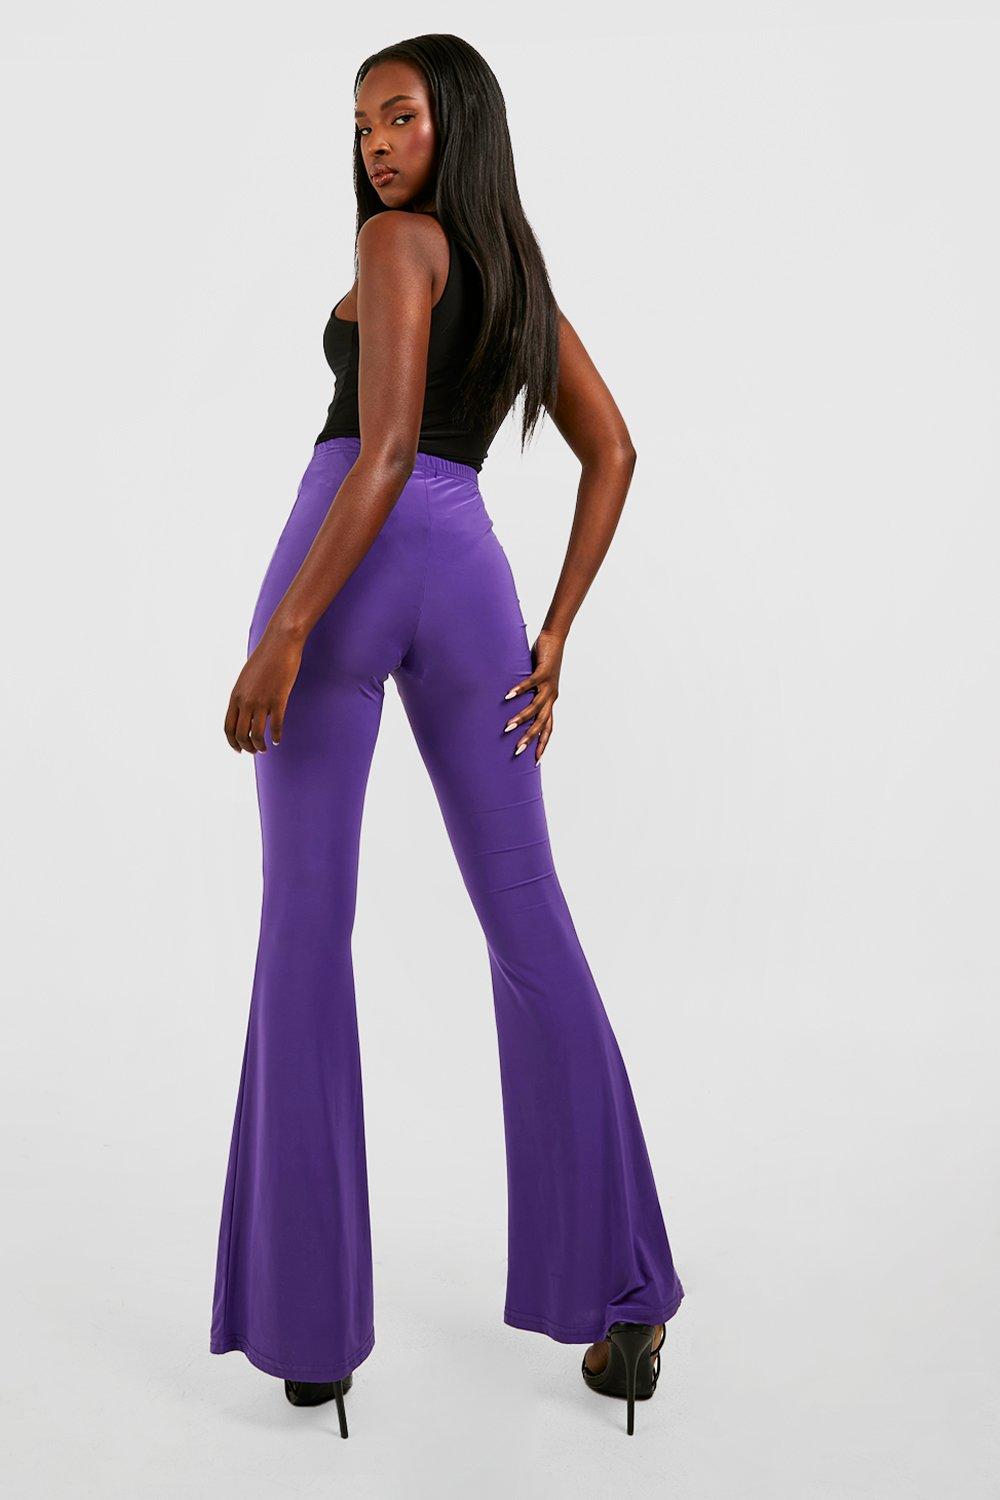 Hfyihgf Women Elegant Corduroy Flare Pants Elastic High Waist Vintage Bell  Bottom Trousers with Pockets(Purple,M)